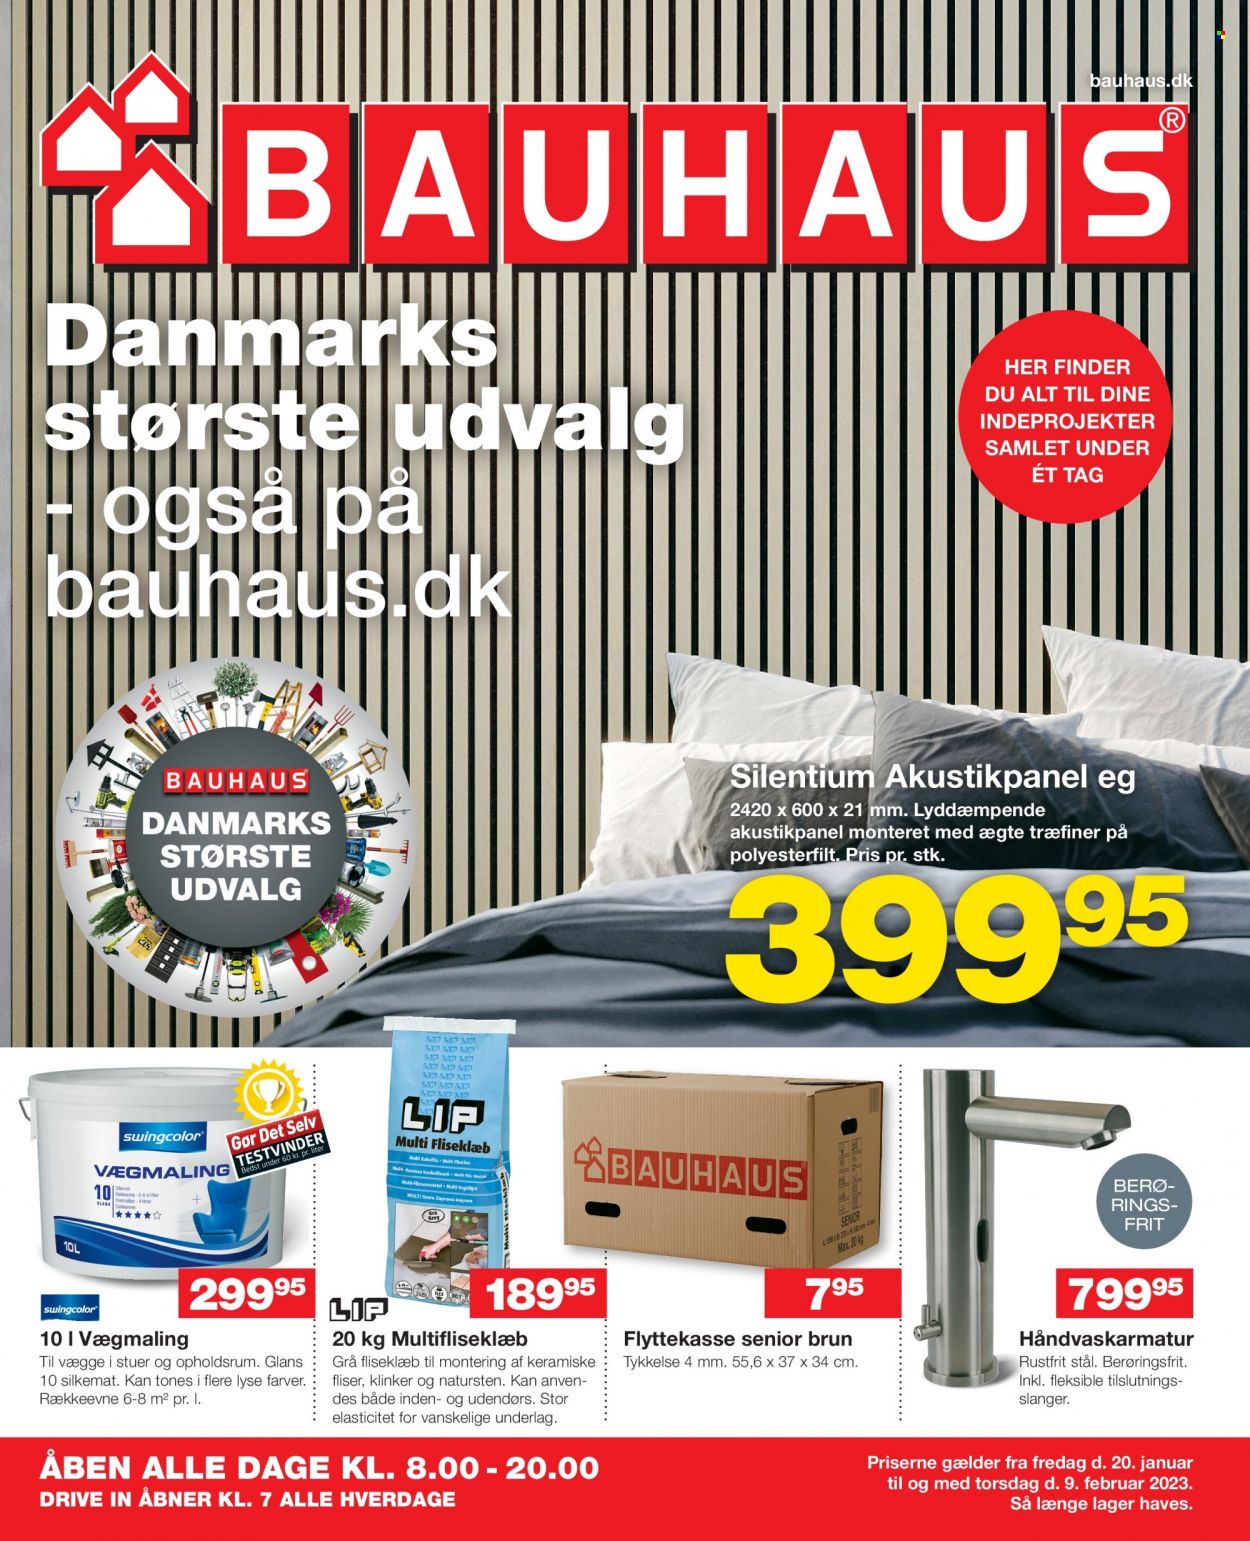 Bauhaus tilbudsavis  - 20.01.2023 - 09.02.2023. Side 1.